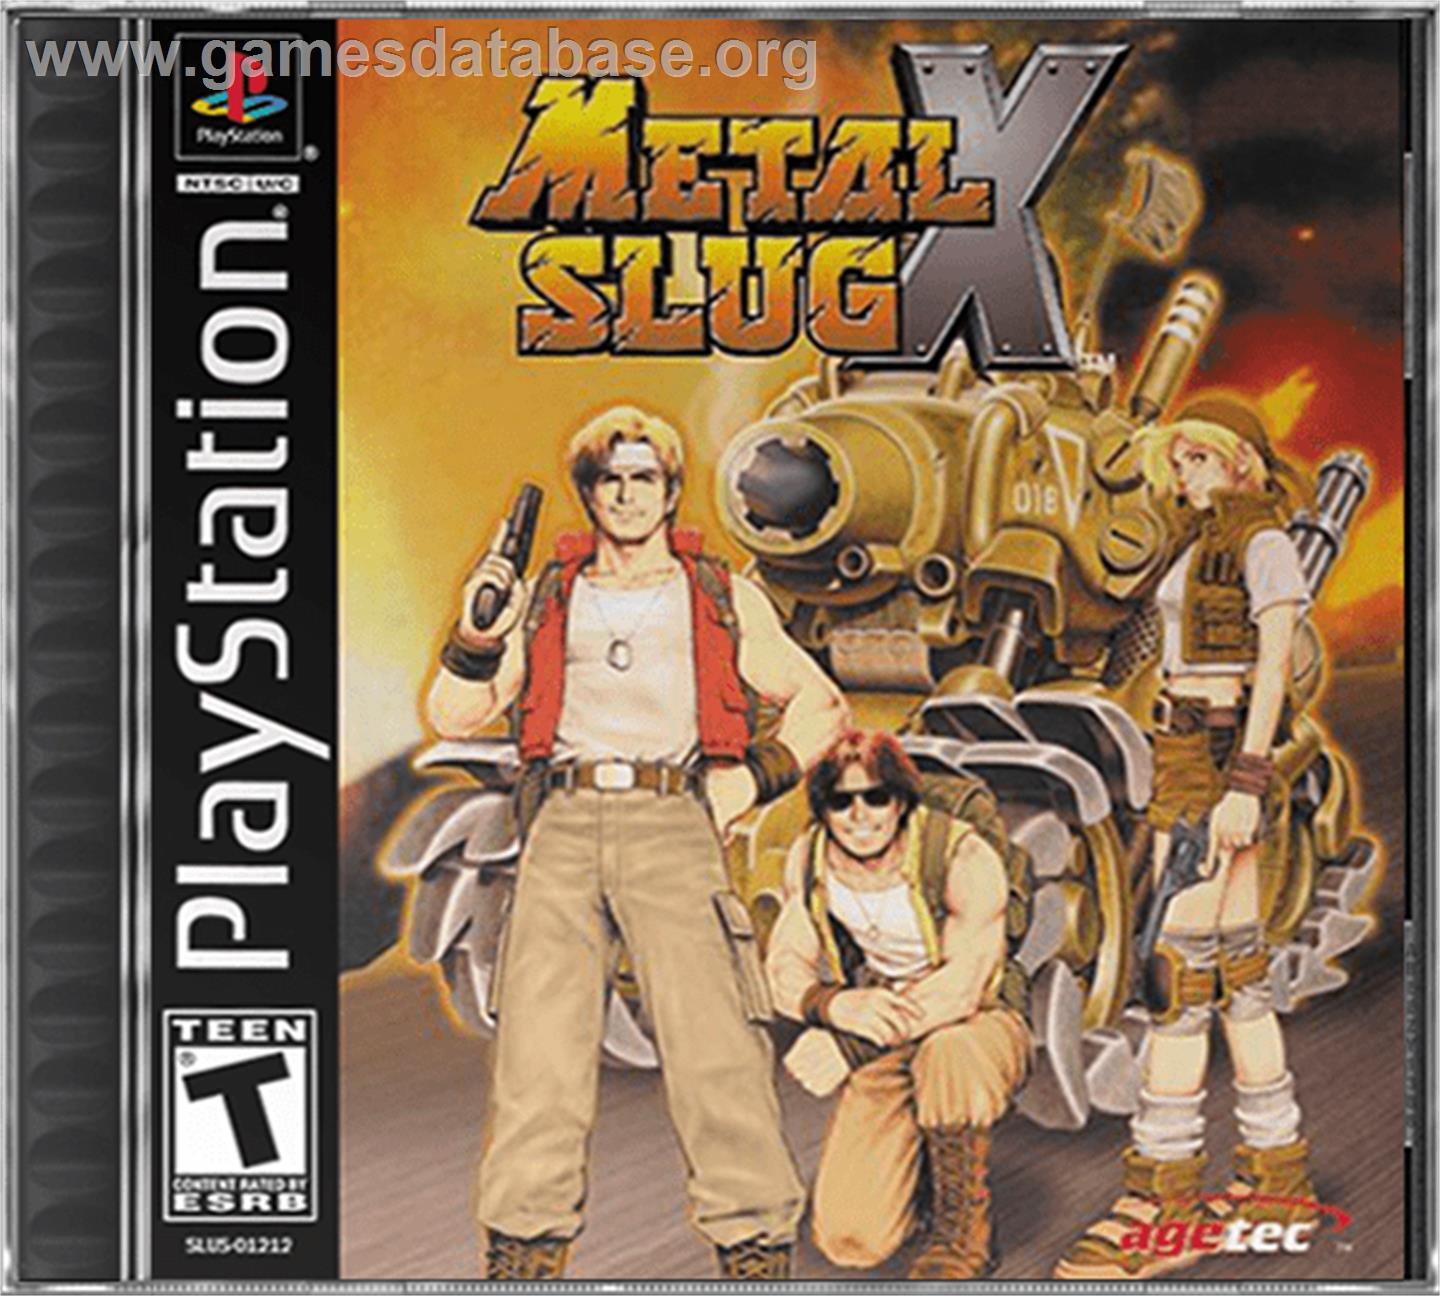 Metal Slug X: Super Vehicle - 001 - Sony Playstation - Artwork - Box